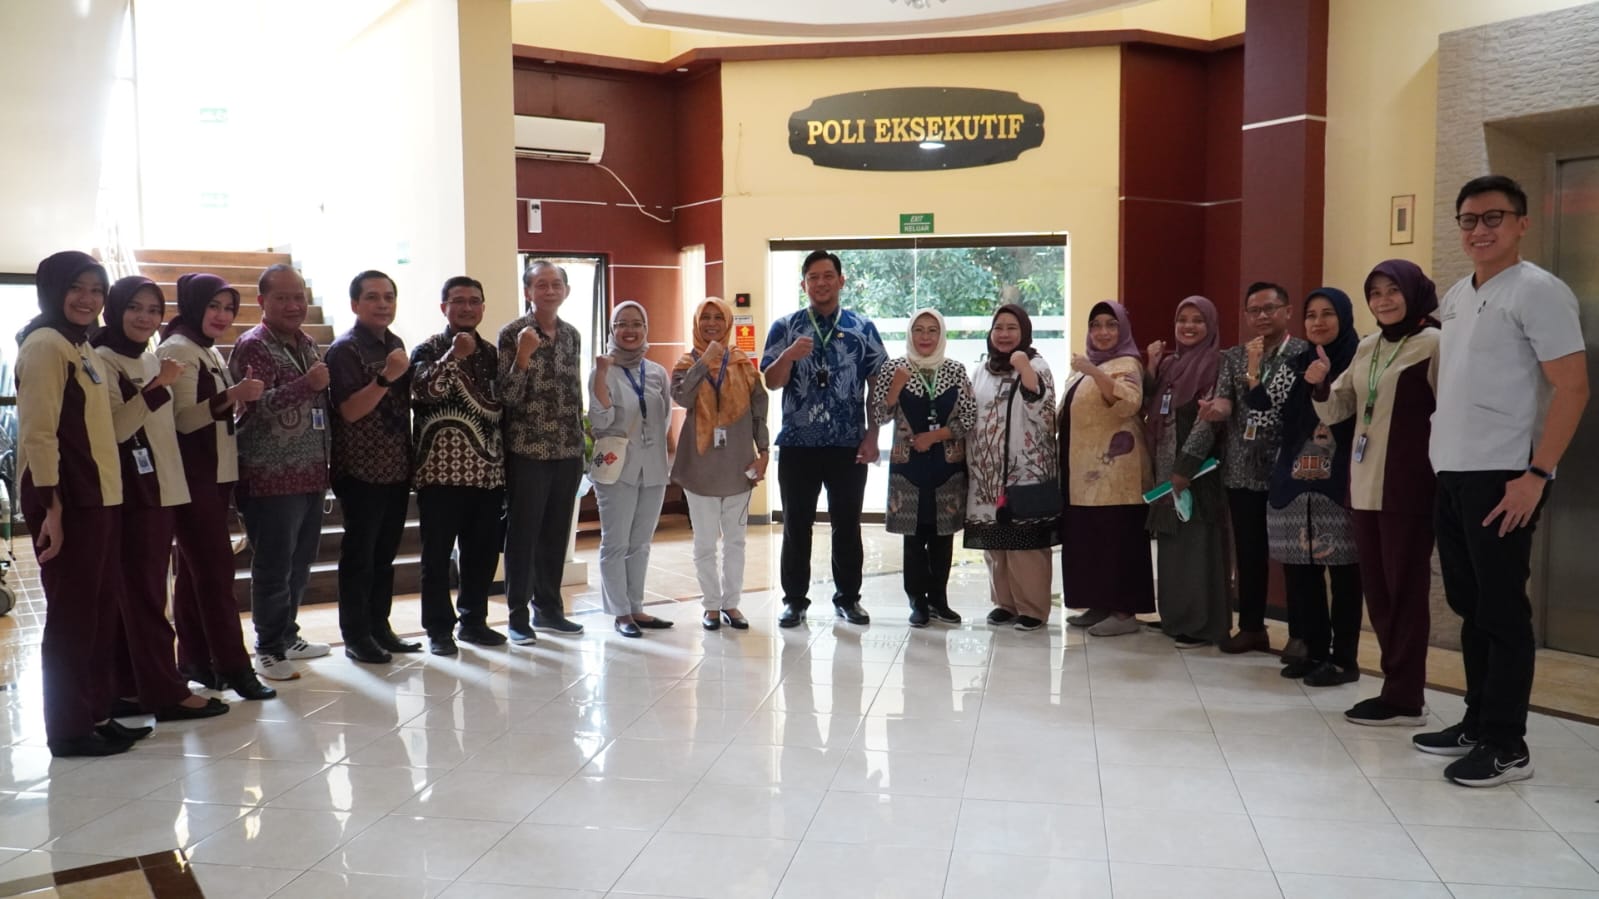 BPJS Kesehatan Proses Uji Kelayakan Poli Eksekutif RSUD Jombang